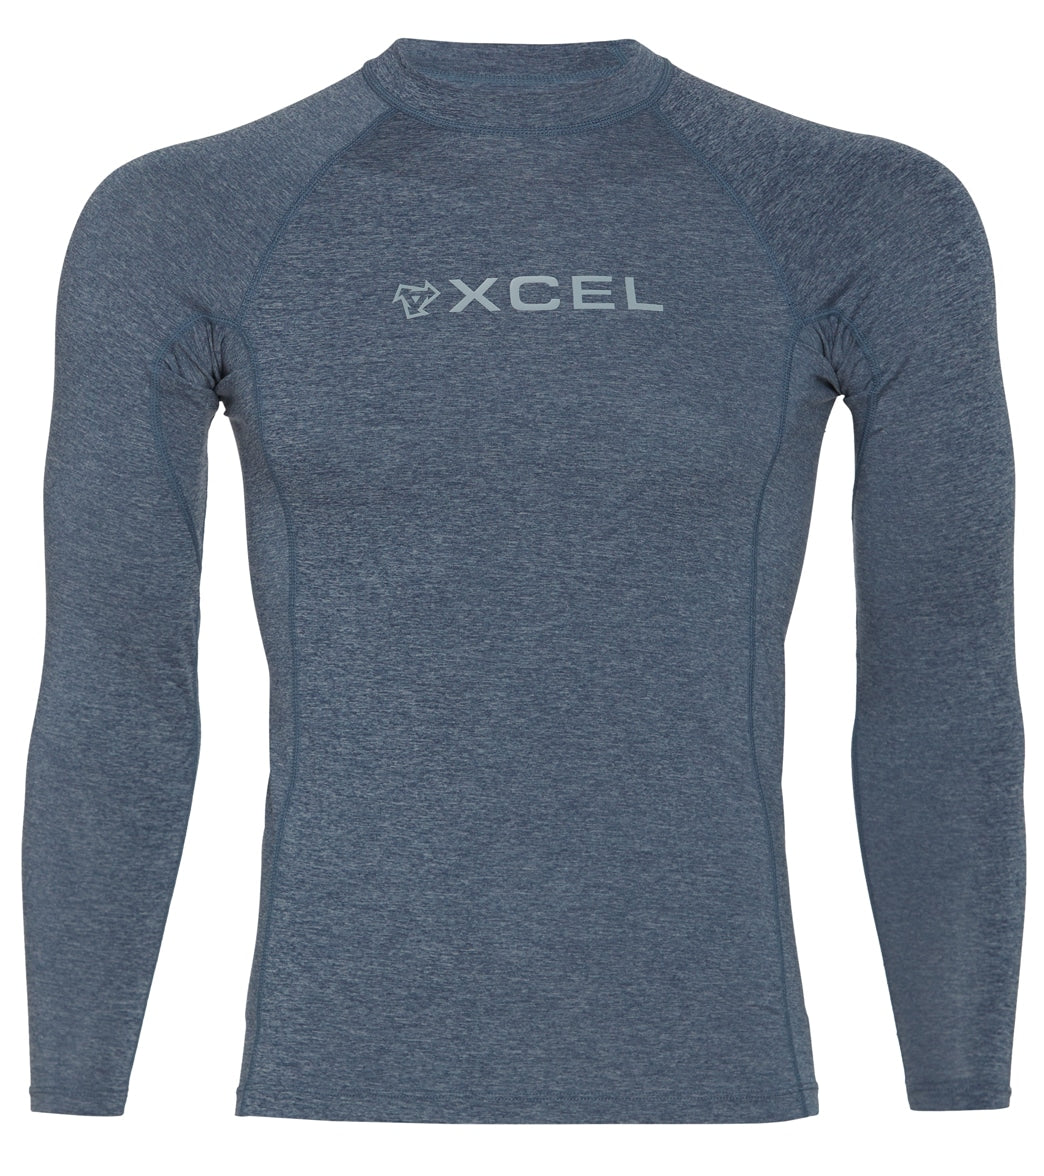 Xcel Mens Premium Stretch Performance Fit Long Sleeve UV Rashguard